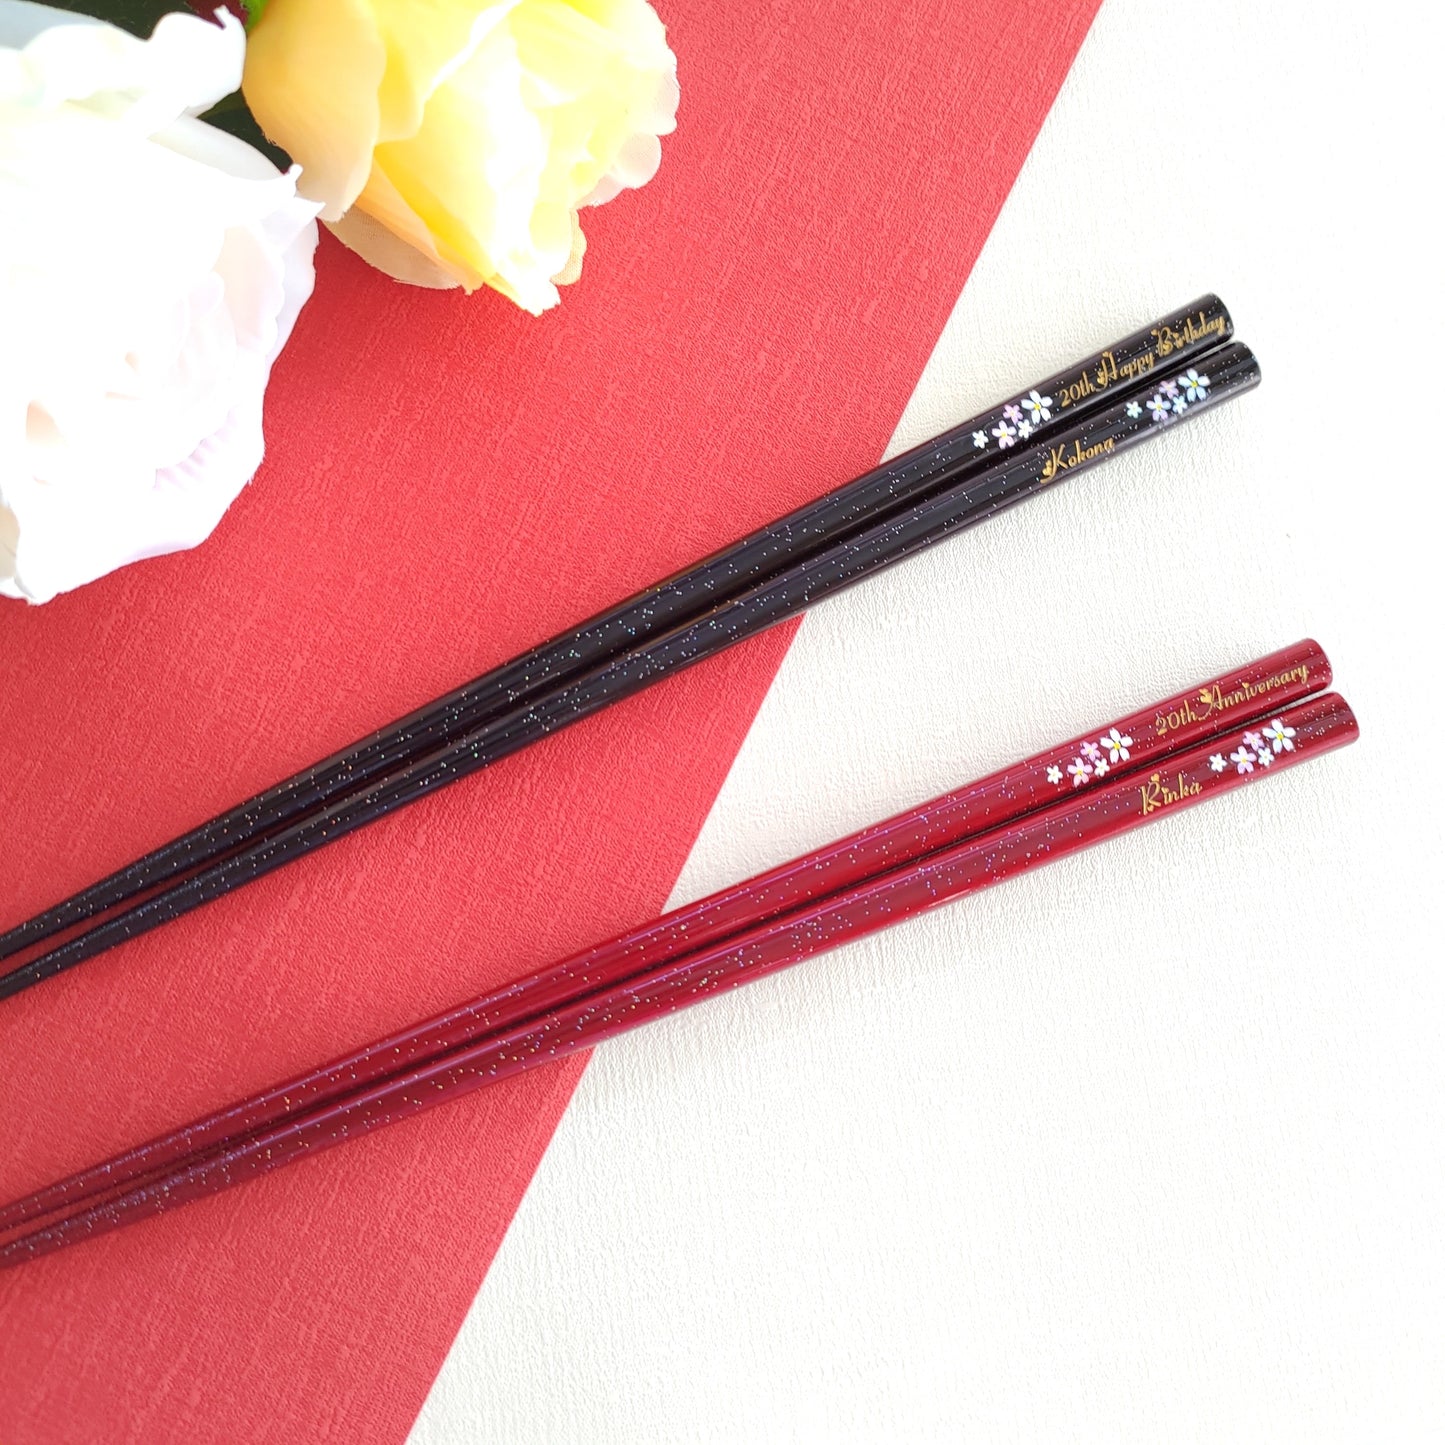 Galaxy flowers Japanese chopsticks black red - DOUBLE PAIR